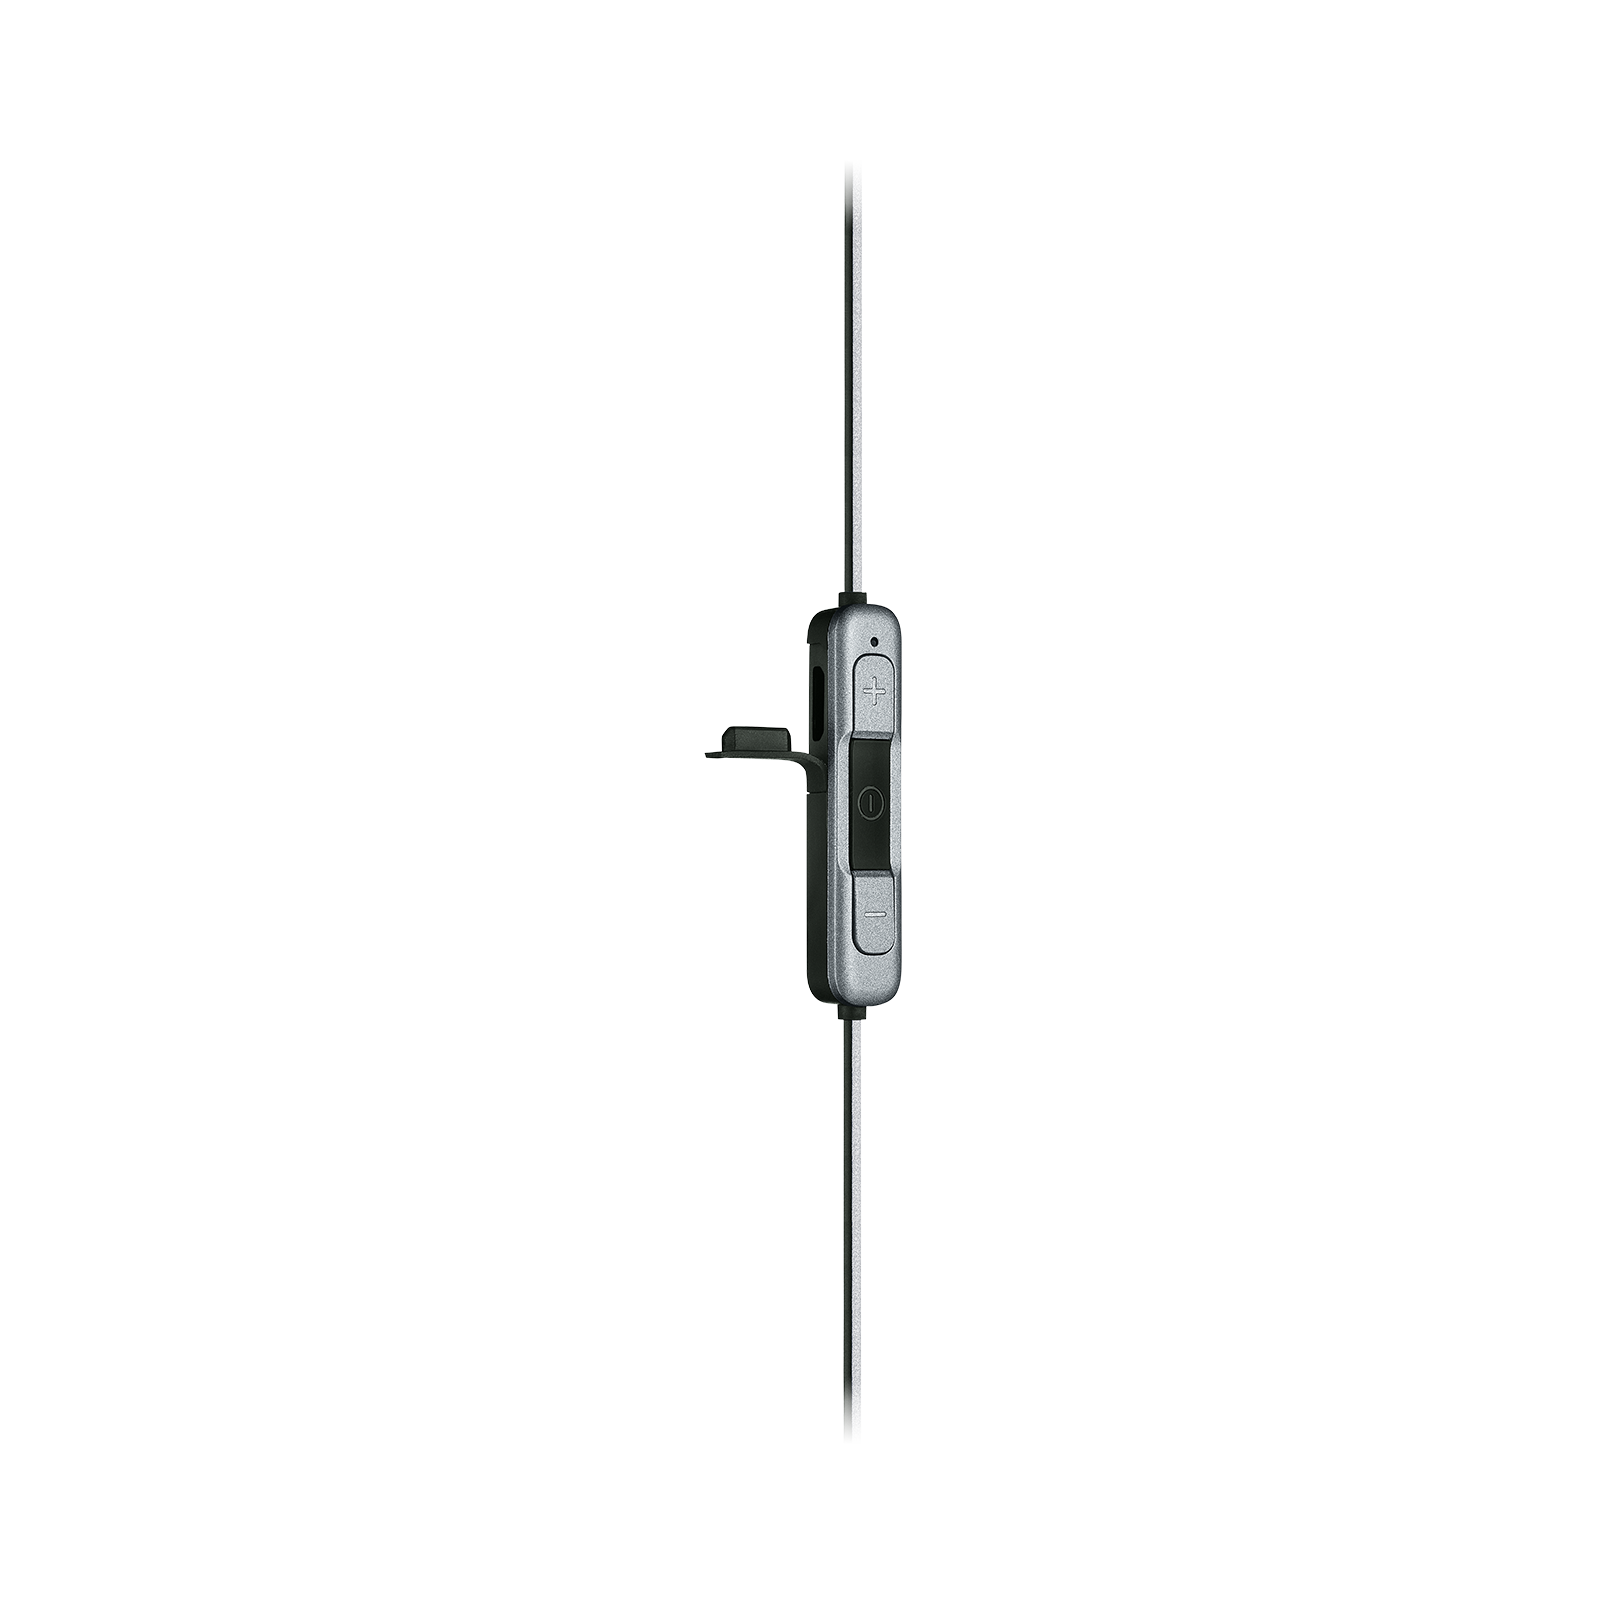 JBL REFLECT MINI 2 - Black - Lightweight Wireless Sport Headphones - Detailshot 4